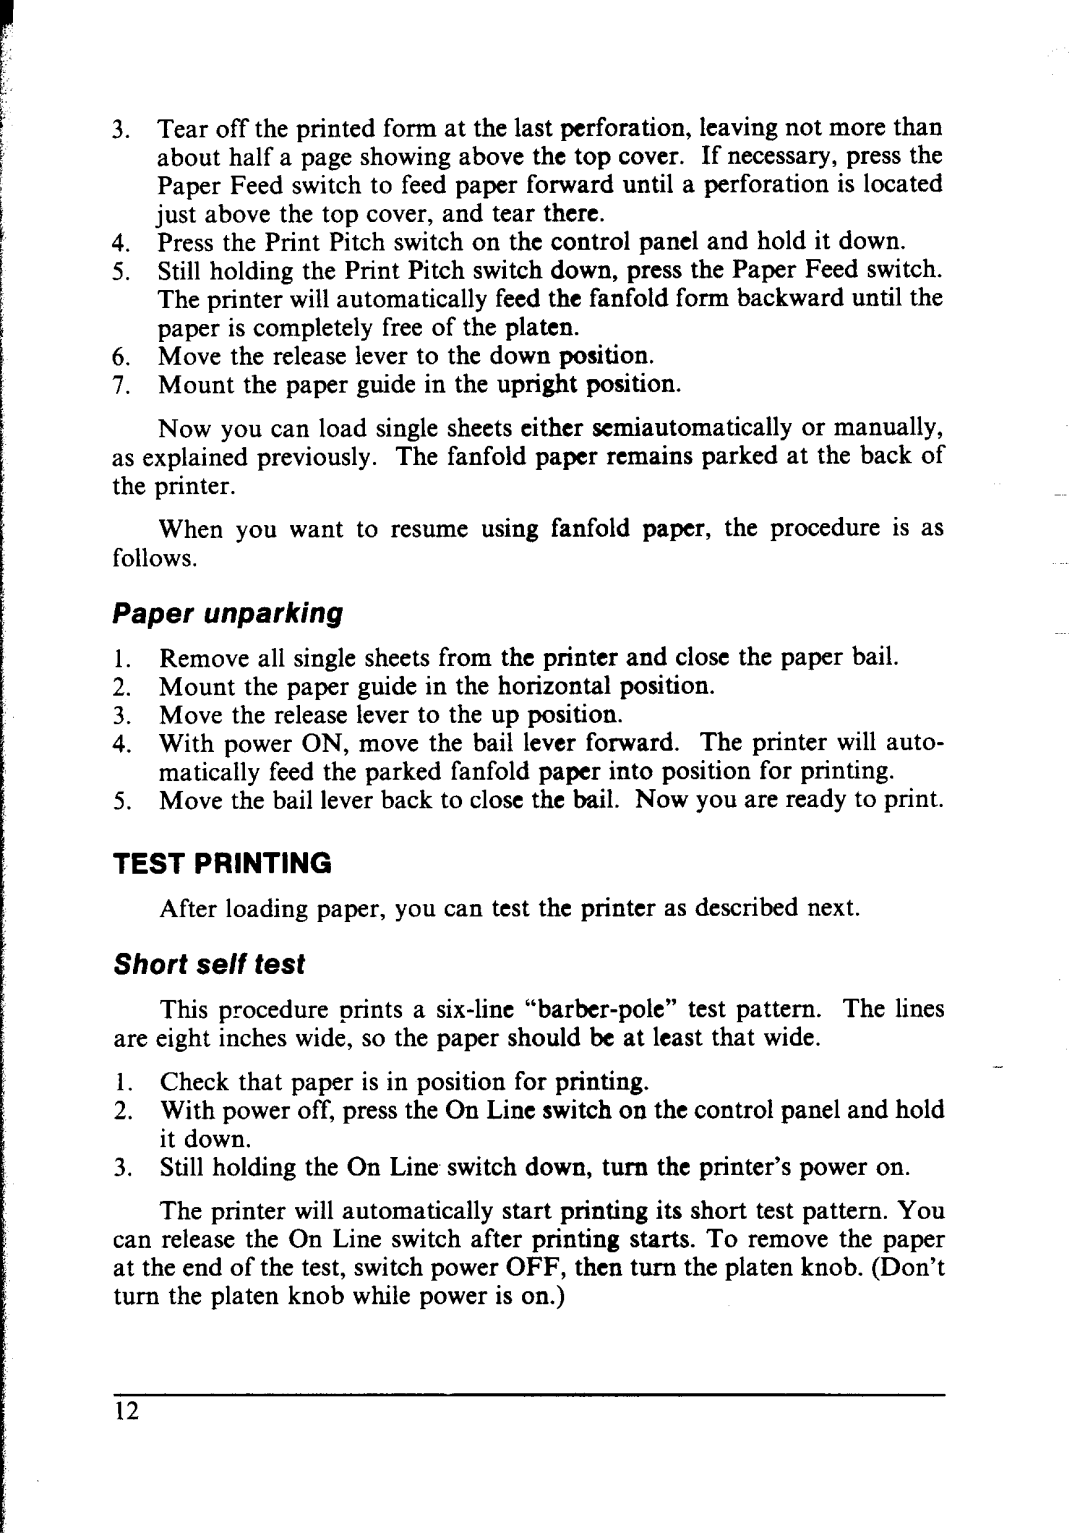 Star Micronics NX-1000 manual Paper unparking, Test Printing, Short self test 